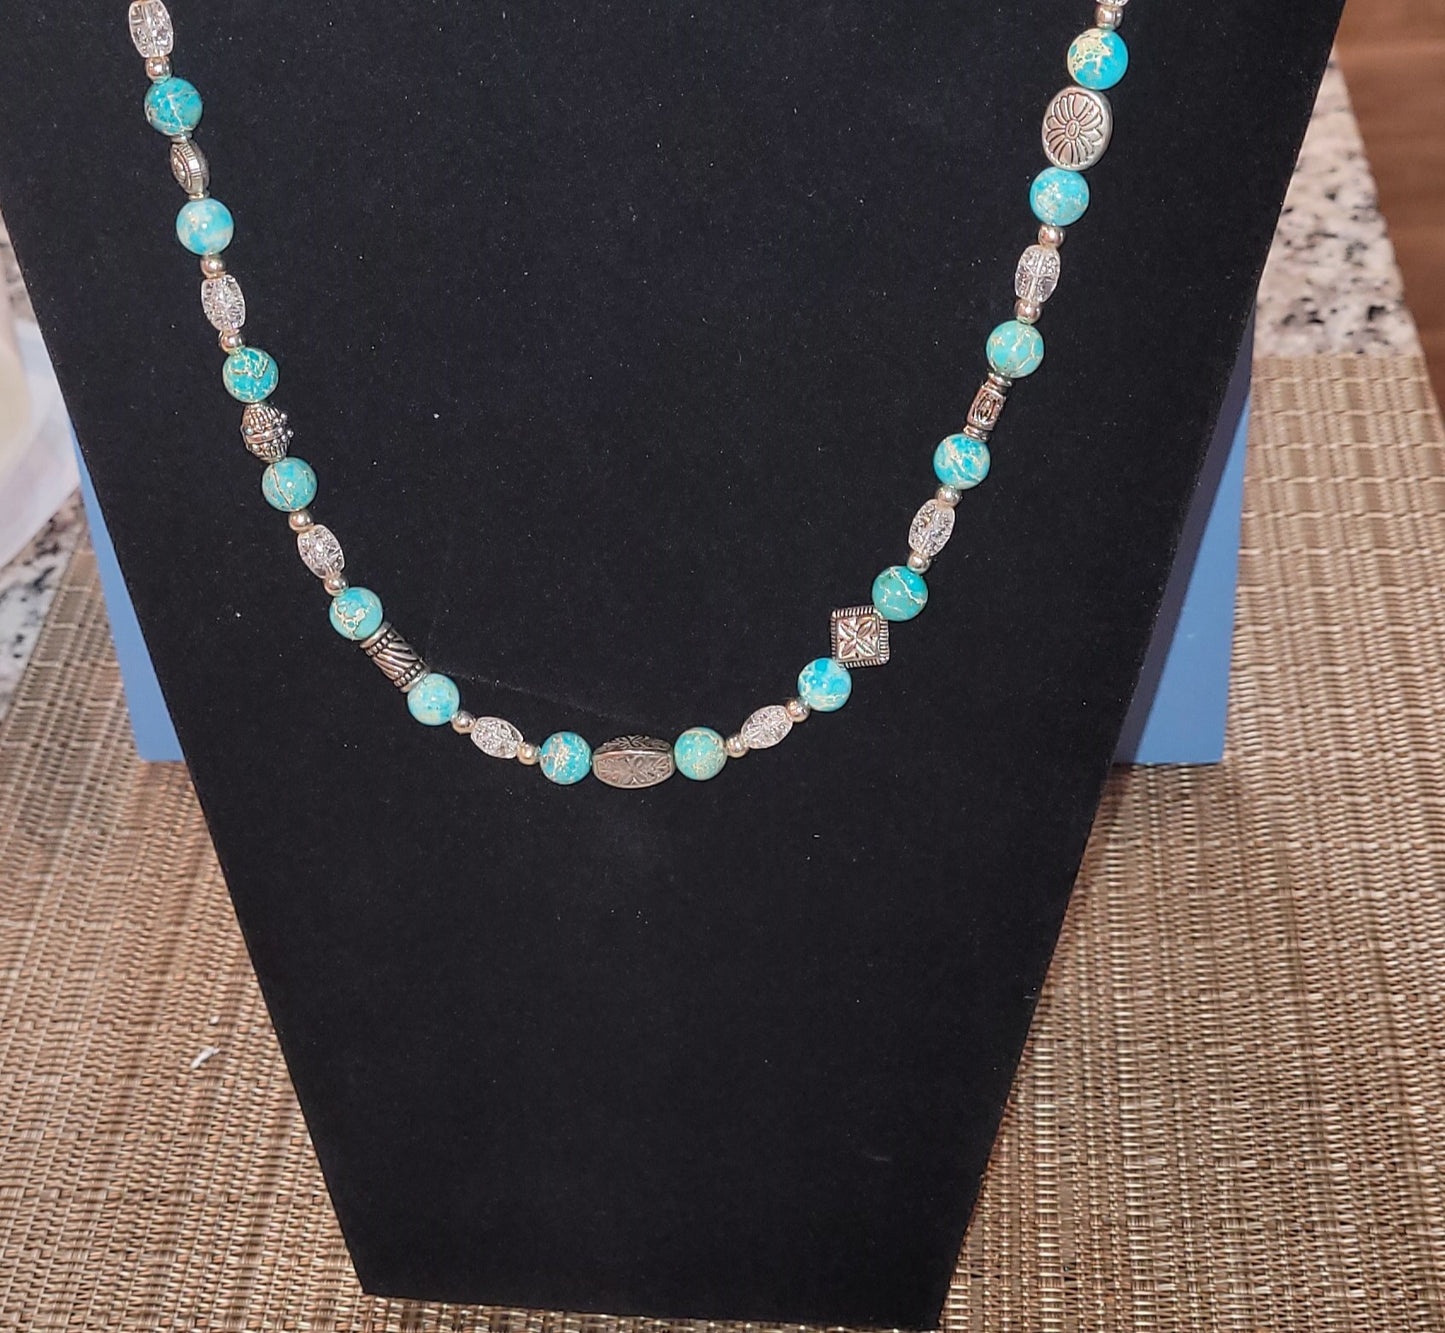 Aqua Terra Jasper with crackled beads